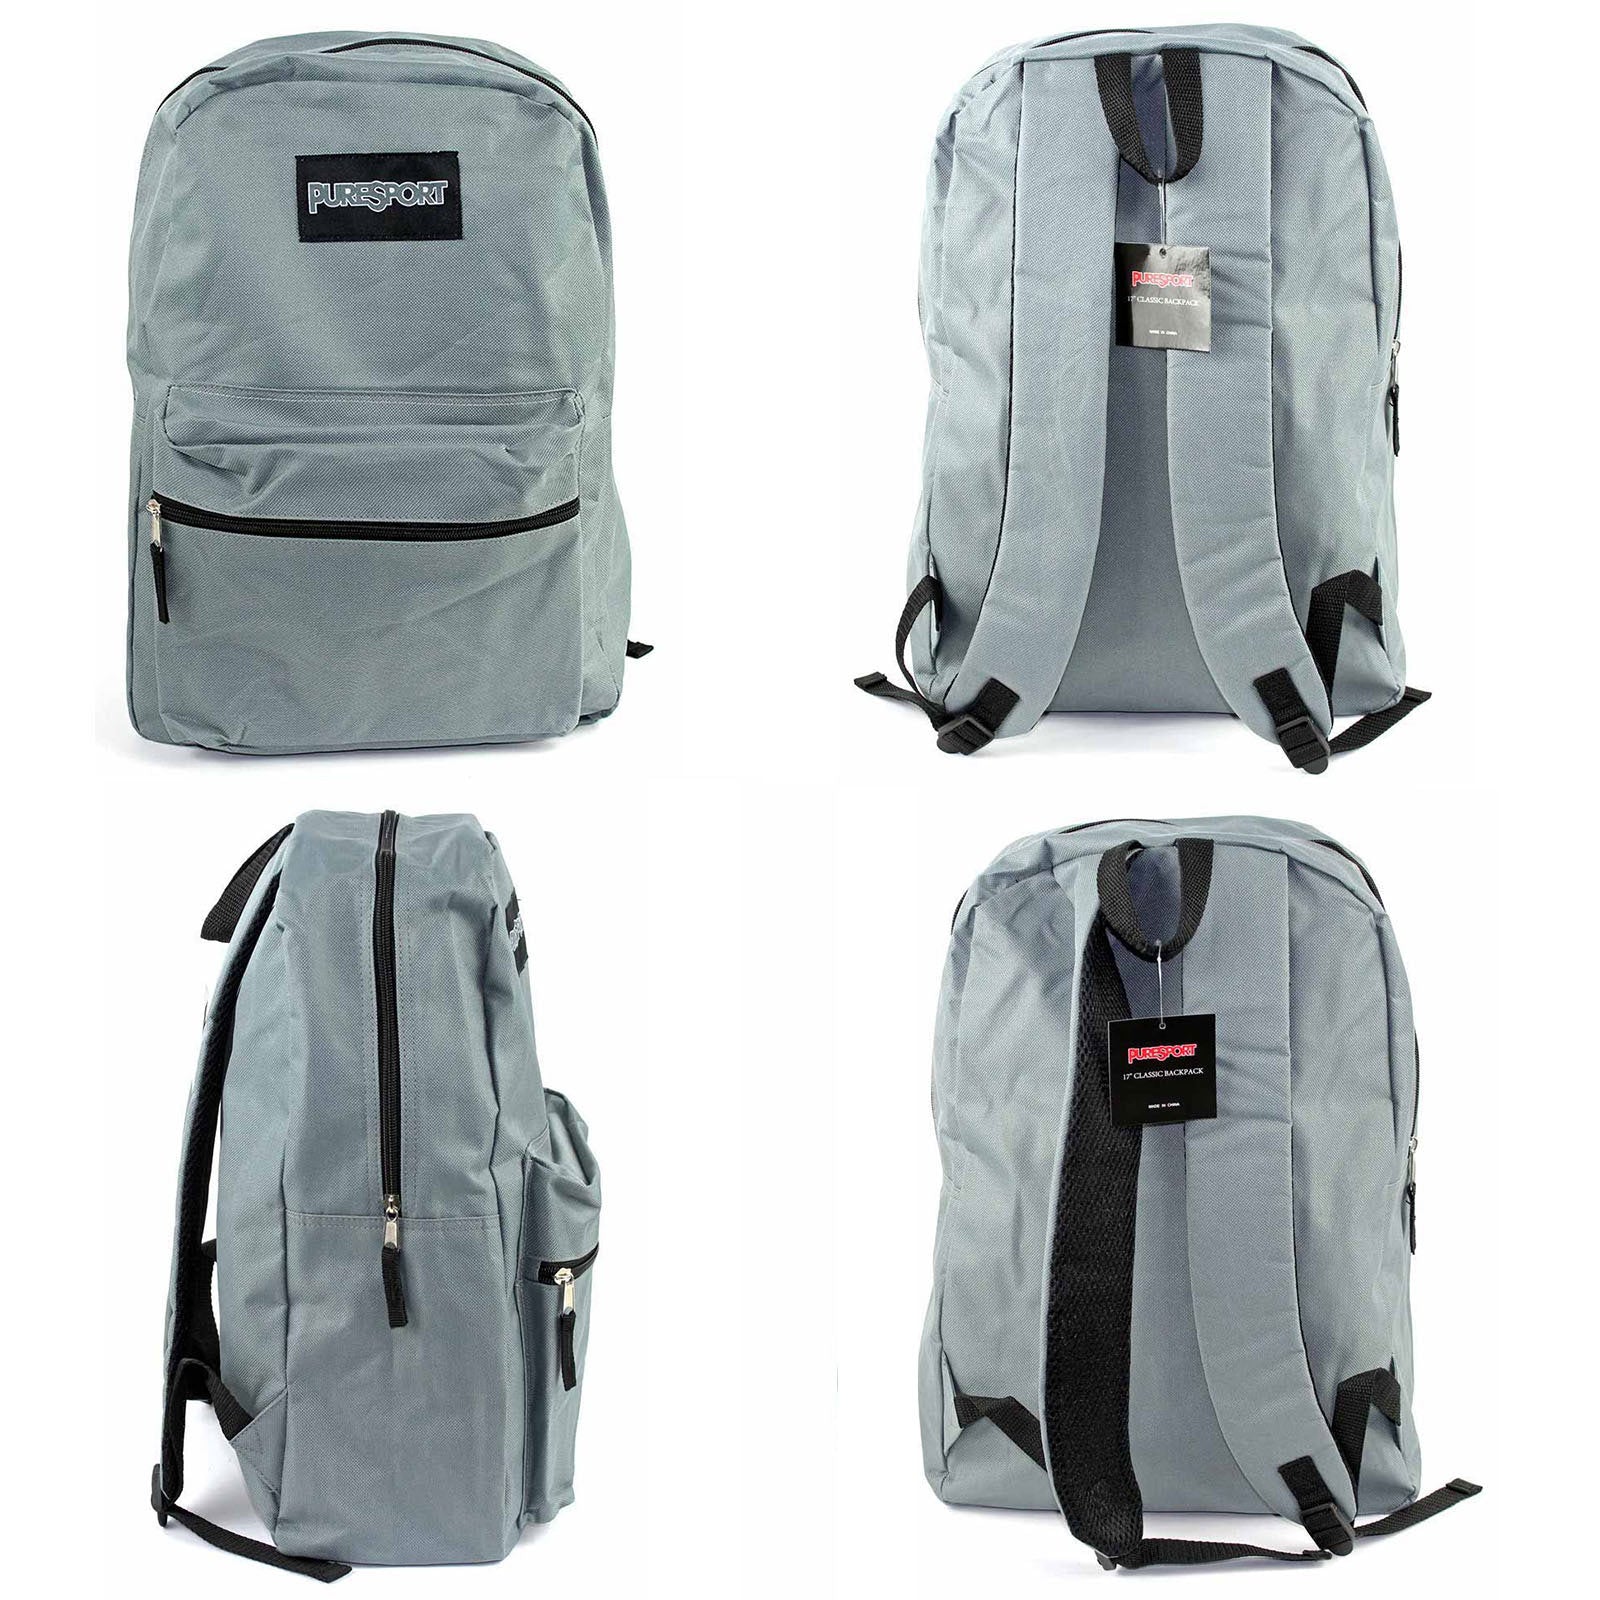 bulk wholesale backpacks in grey 17 inch bookbags for back to school in gray